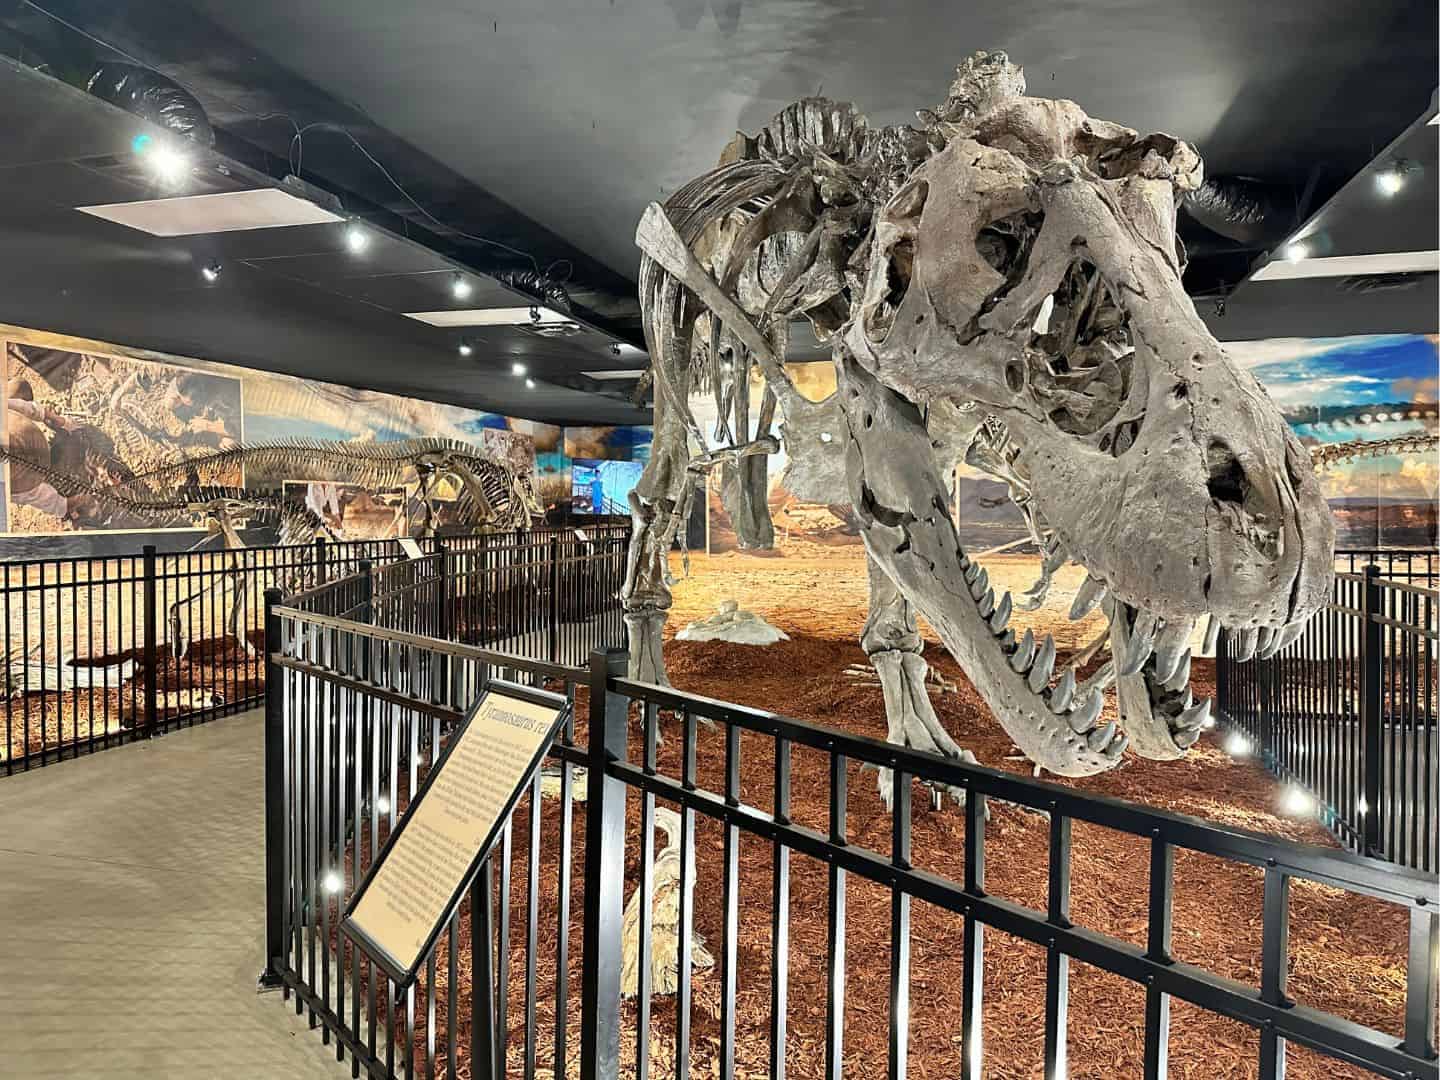 New-Doom-of-the-Dinosaurs-Exhibit-at-Dinosaur-World-Dani-Meyering